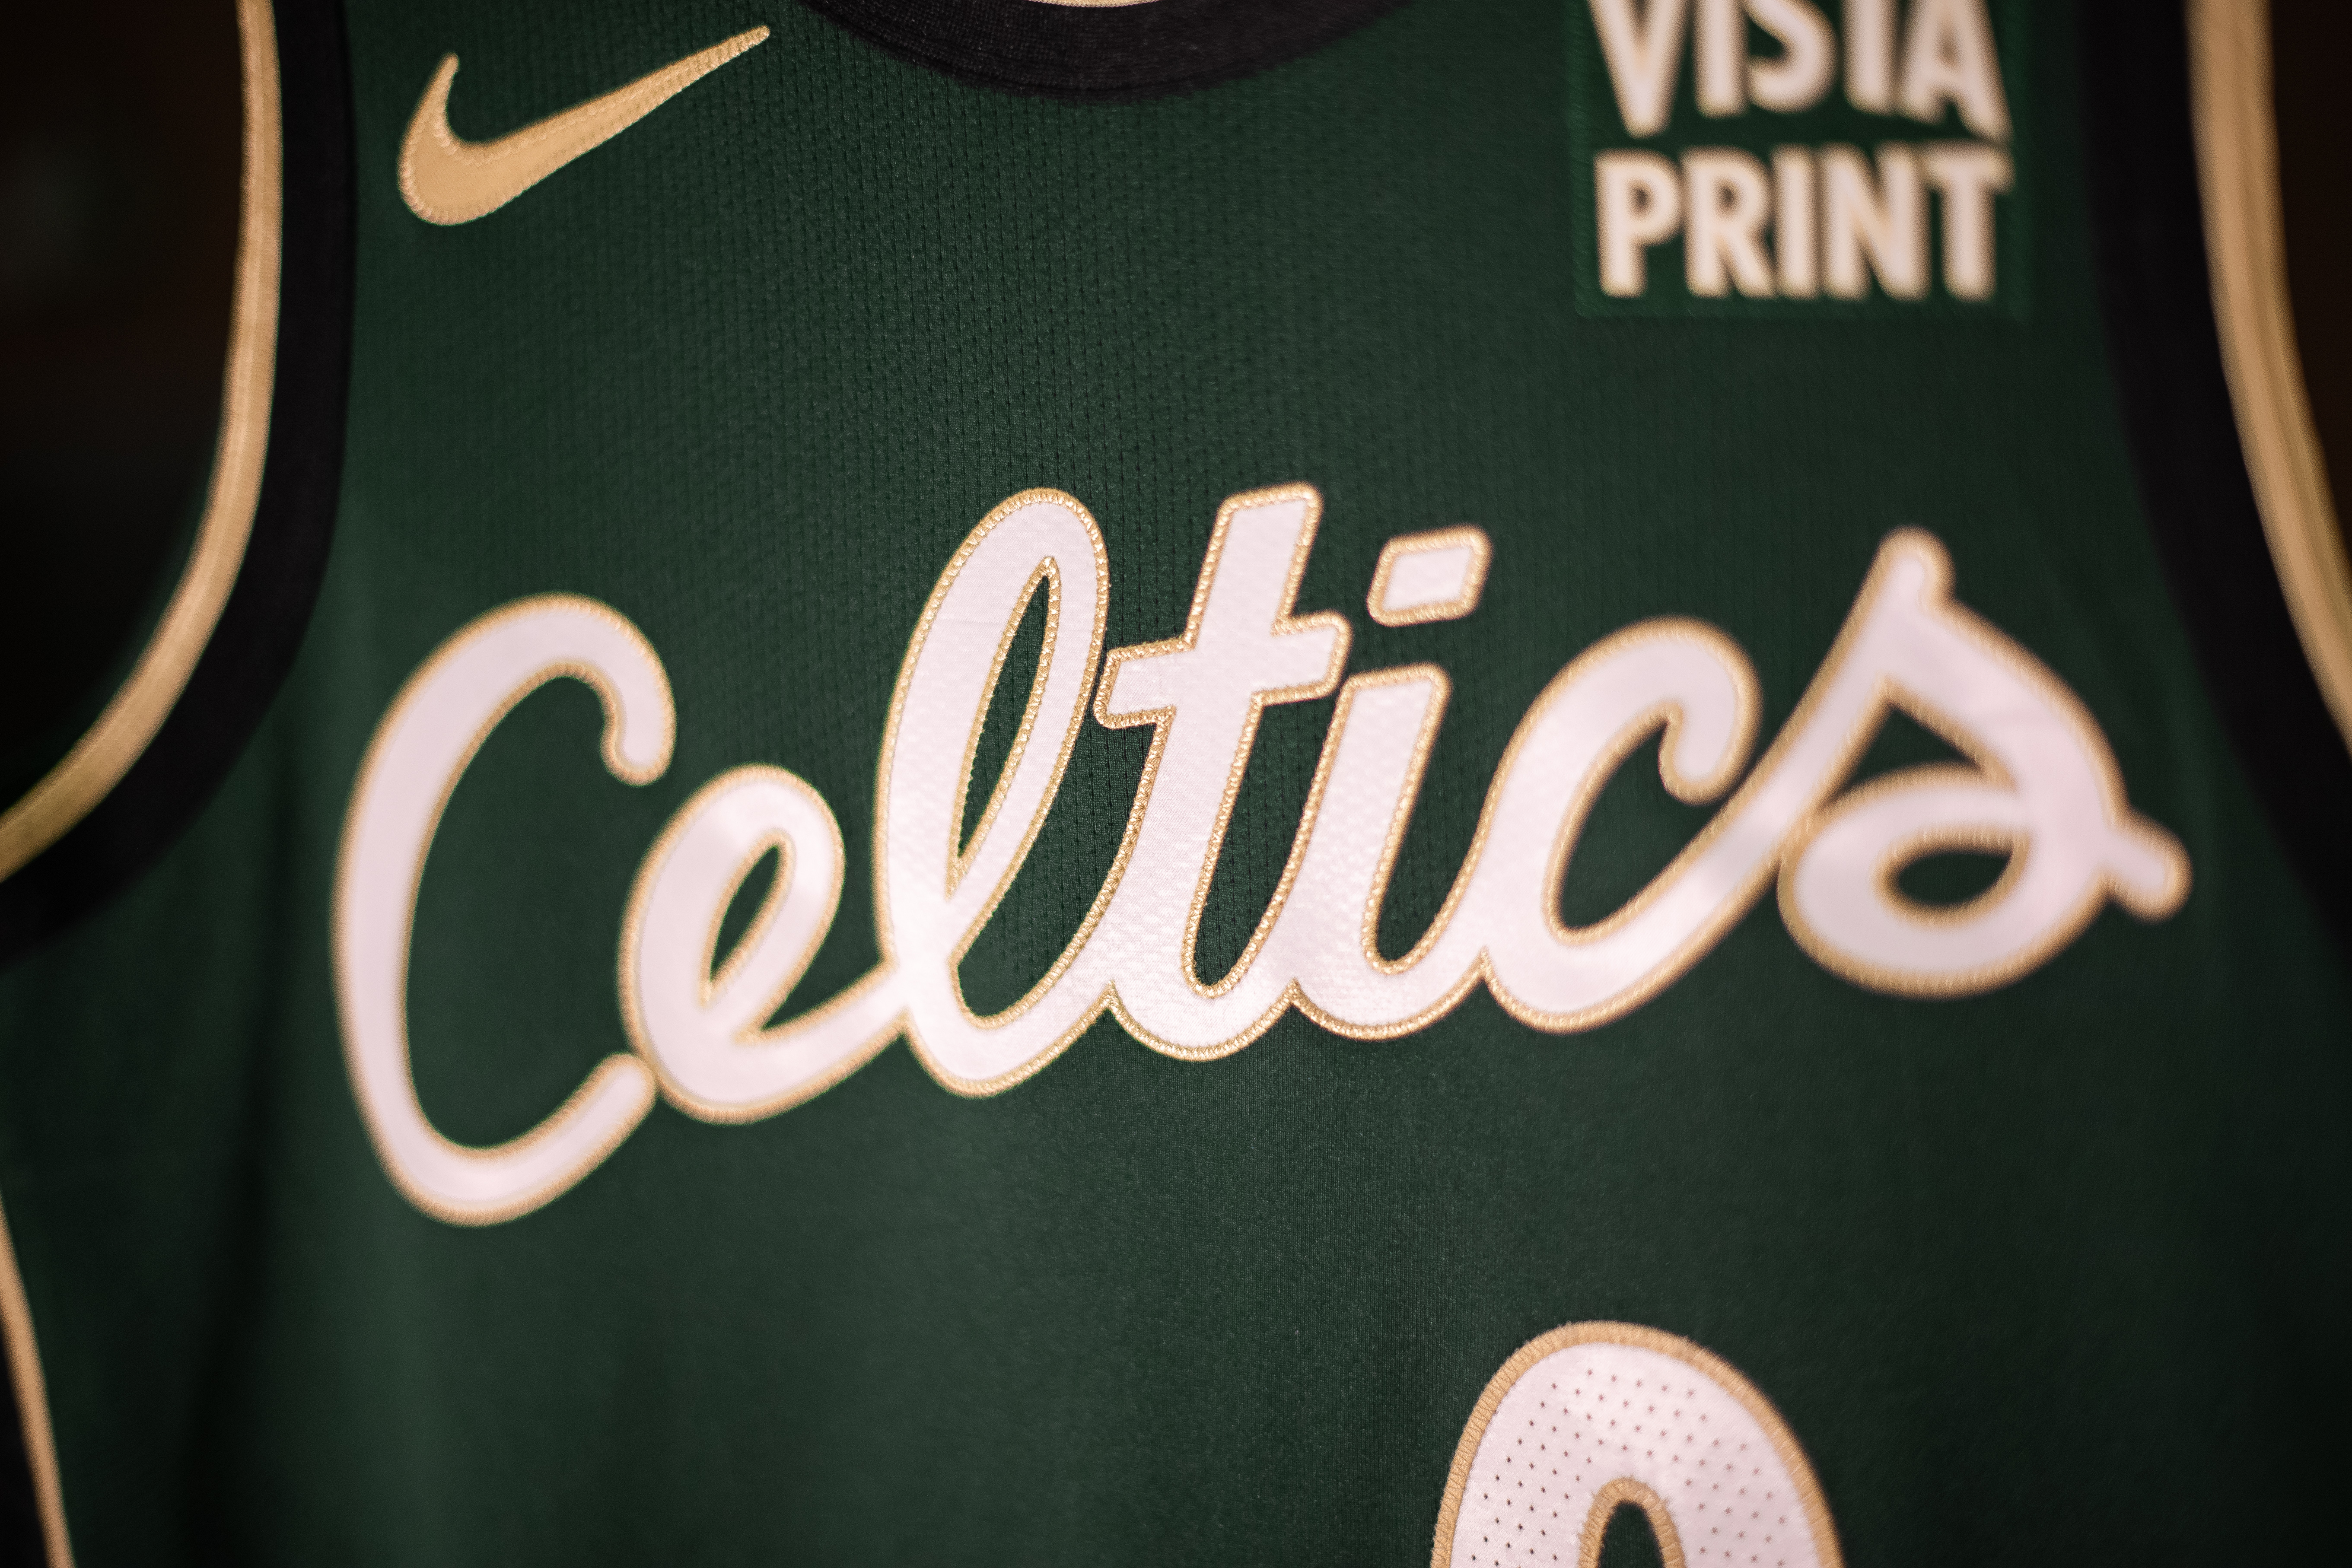 Celtics City Edition 2023: See photos of new jerseys honoring Bill Russell